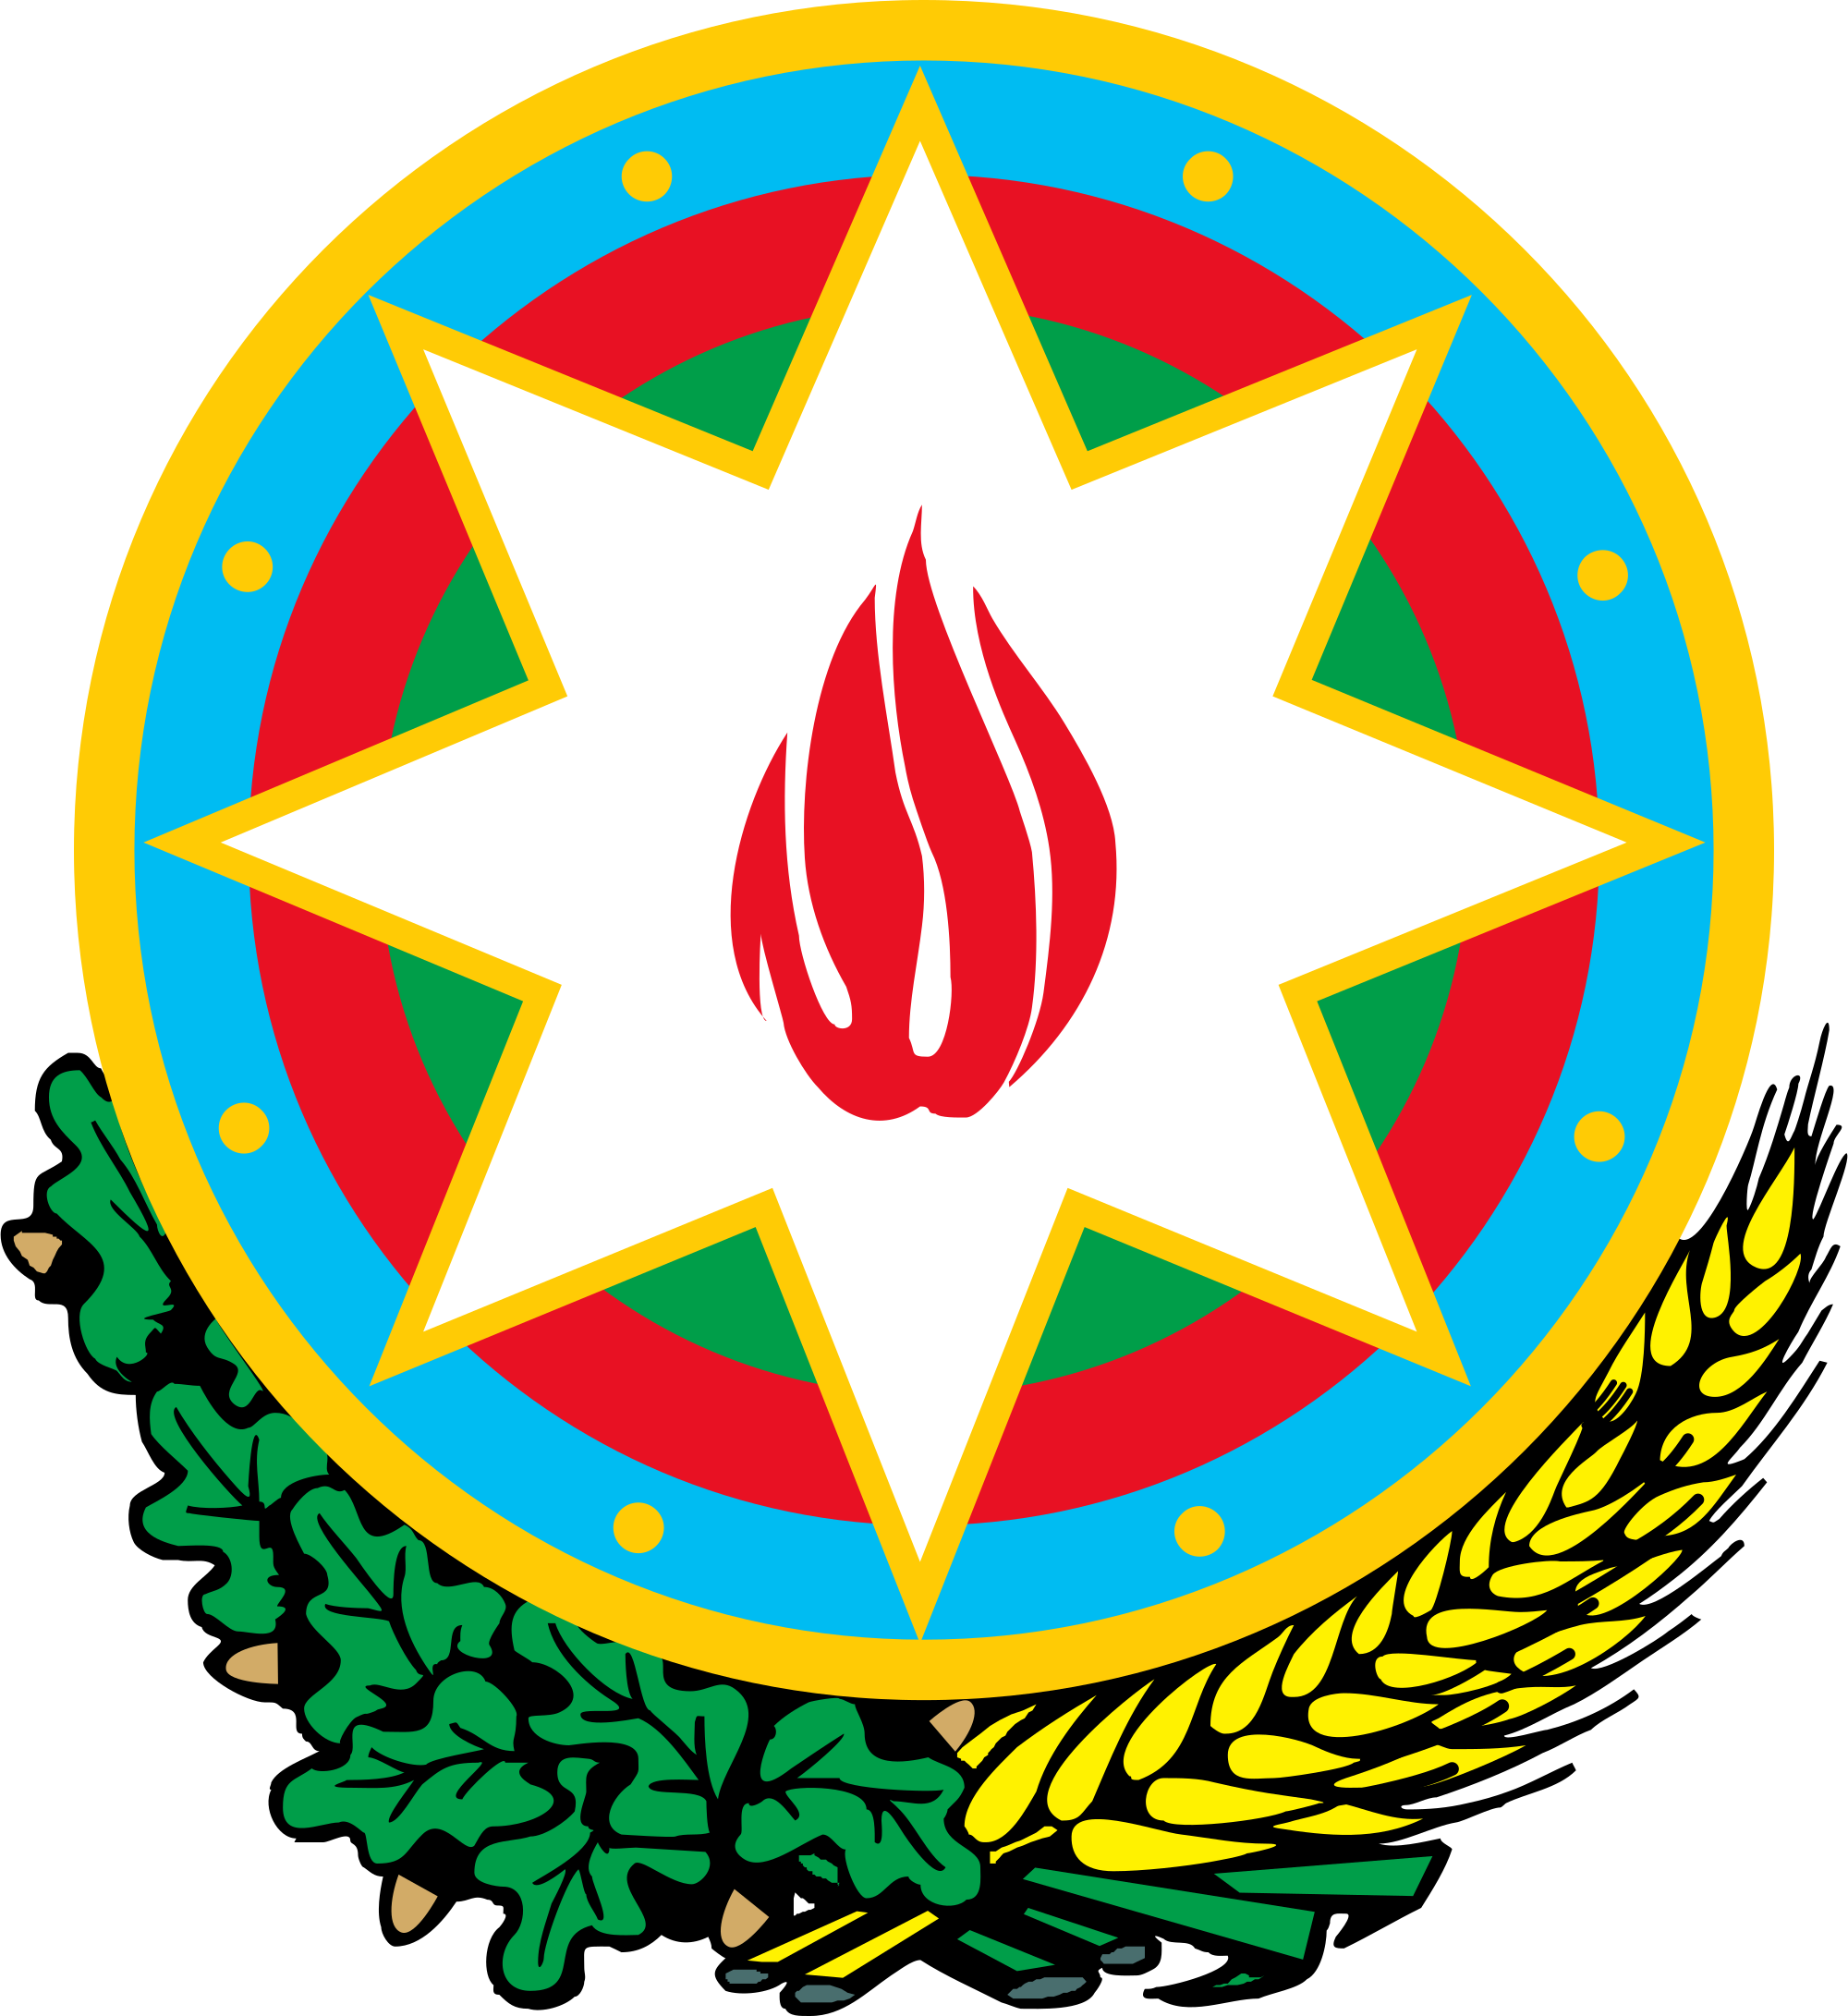 Details - Azerbaijan Government (2000x2182)